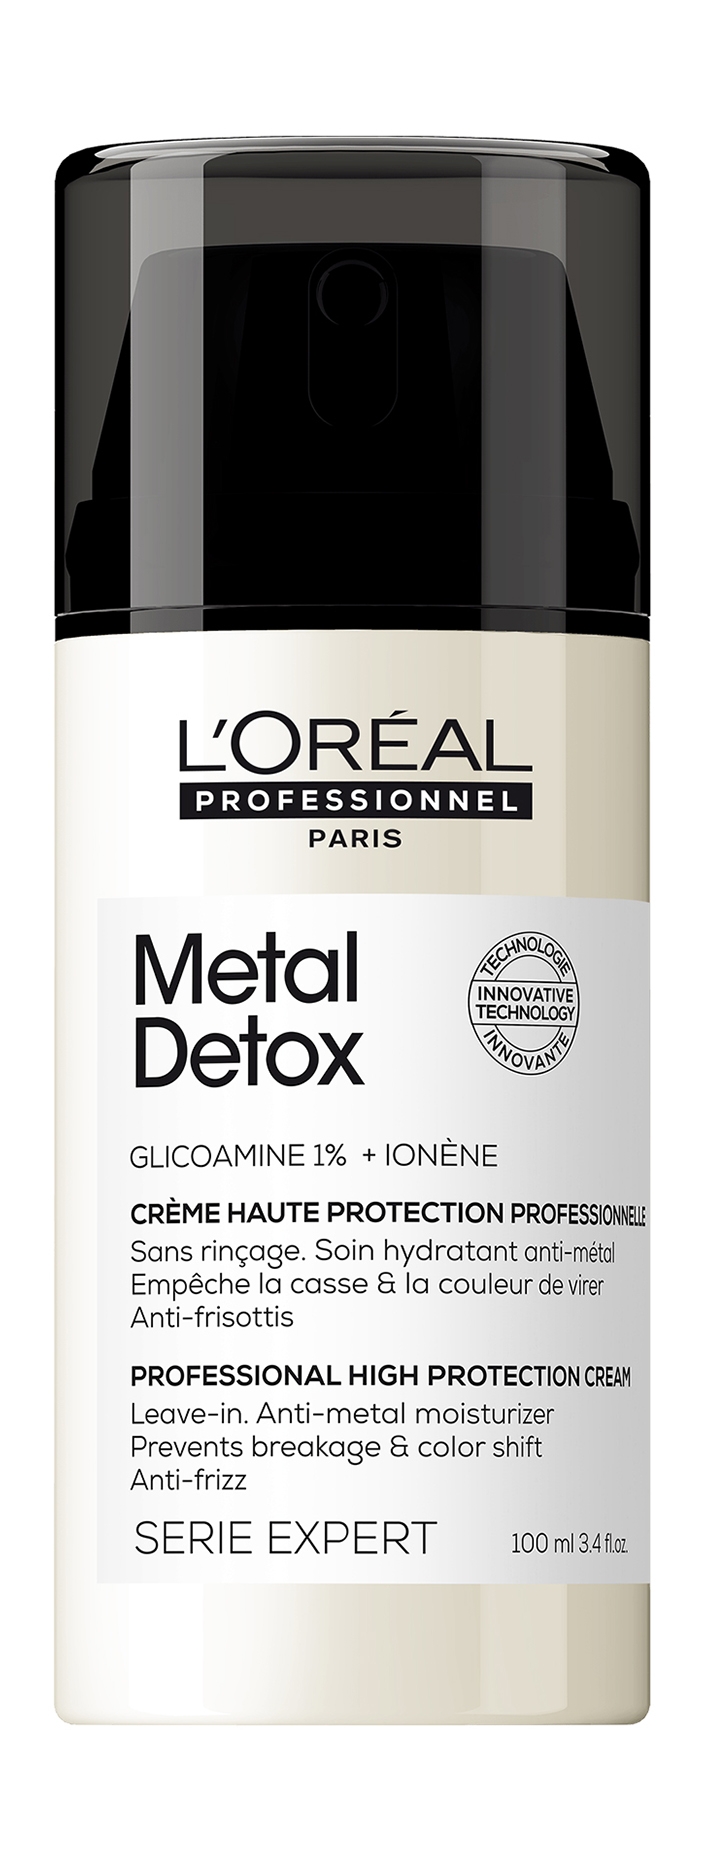 Крем для волос L'Oreal Professionnel Serie Expert Metal Detox High Protection Cream, 100мл крепеж клипса для труб урал пак 20 мм ат 50120 020